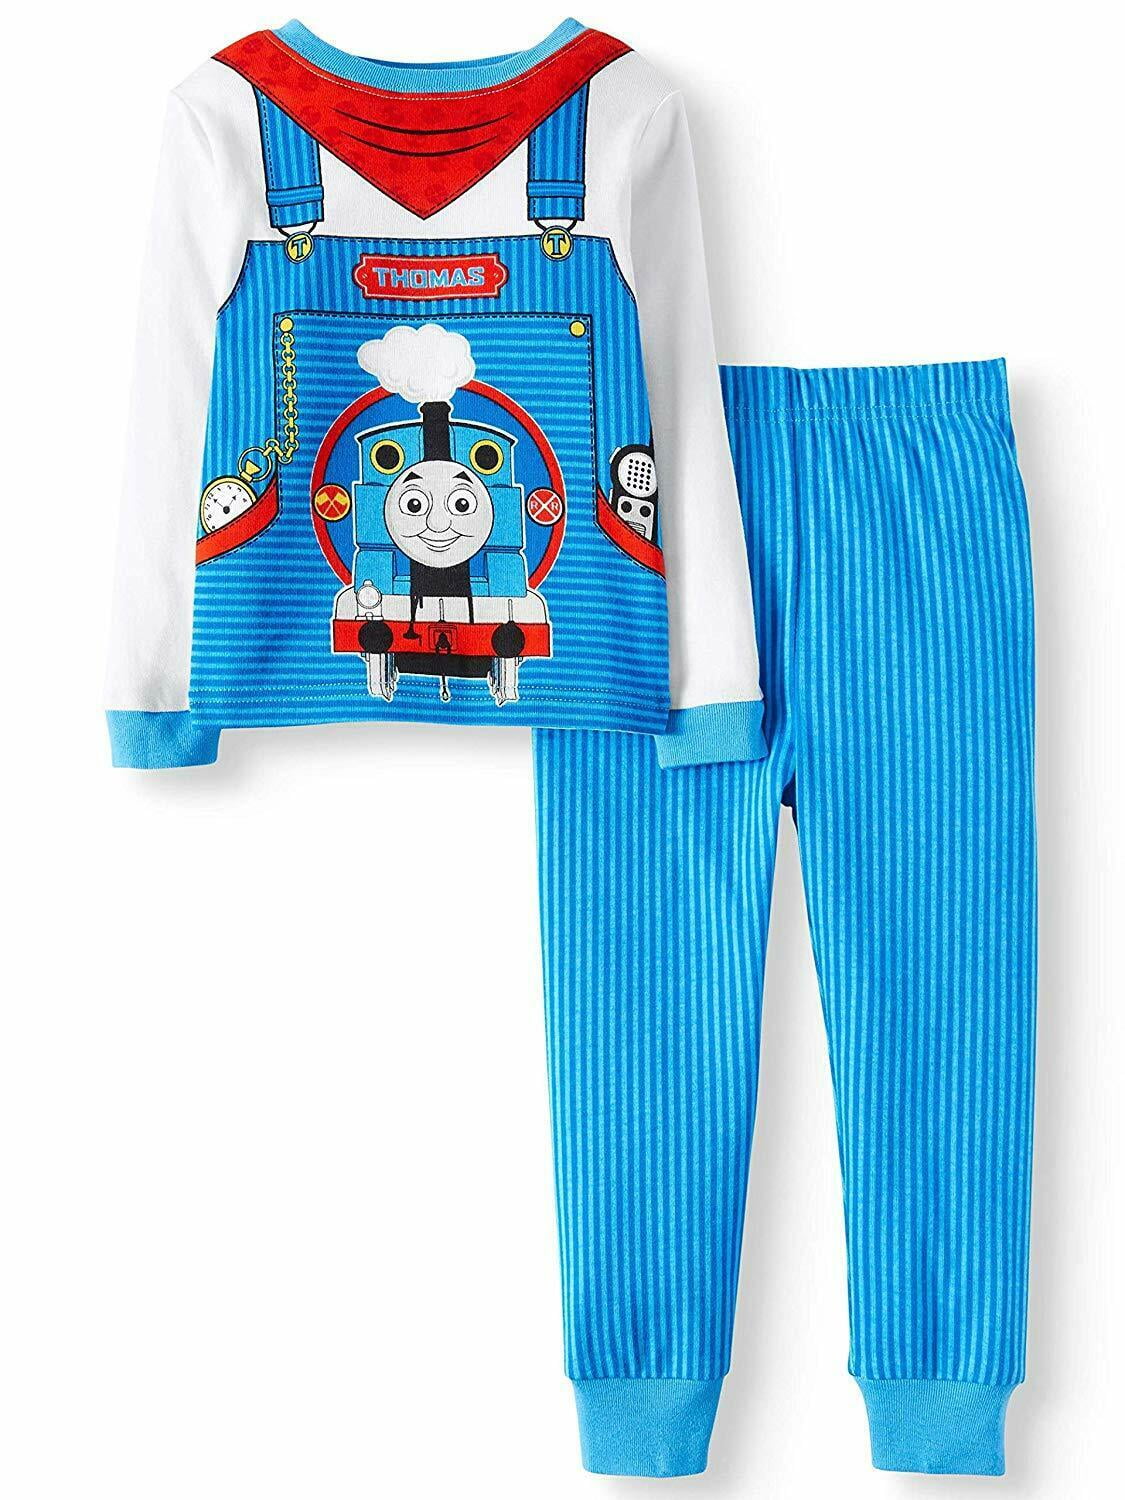 Toddler Girls Nautcia $36.50 Gray & Magenta Sweater Dress w/ Pockets Size 2T-3T 